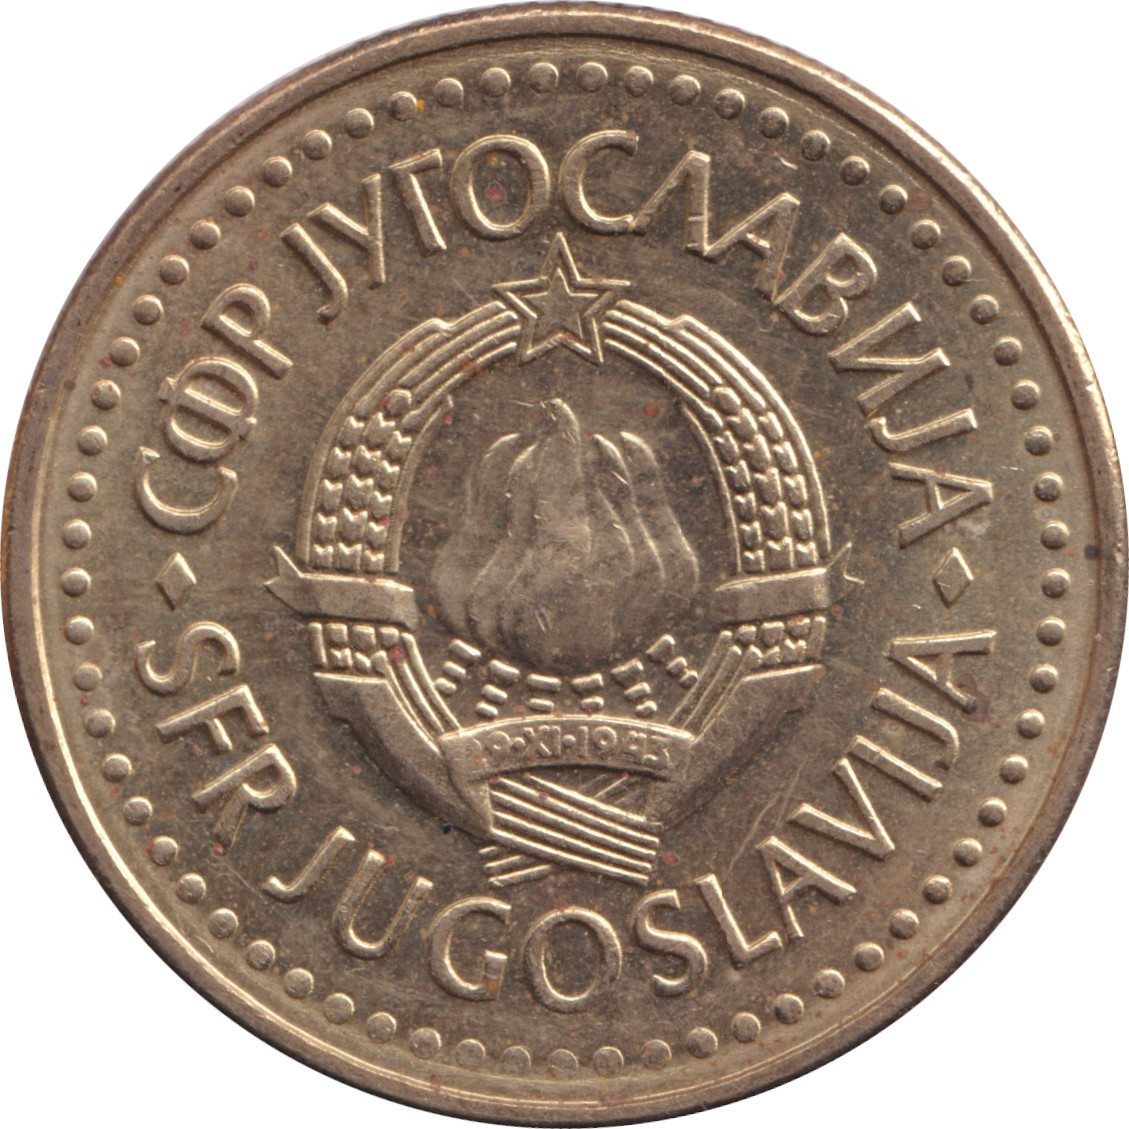 5 dinara - Emblem - 1982 issue